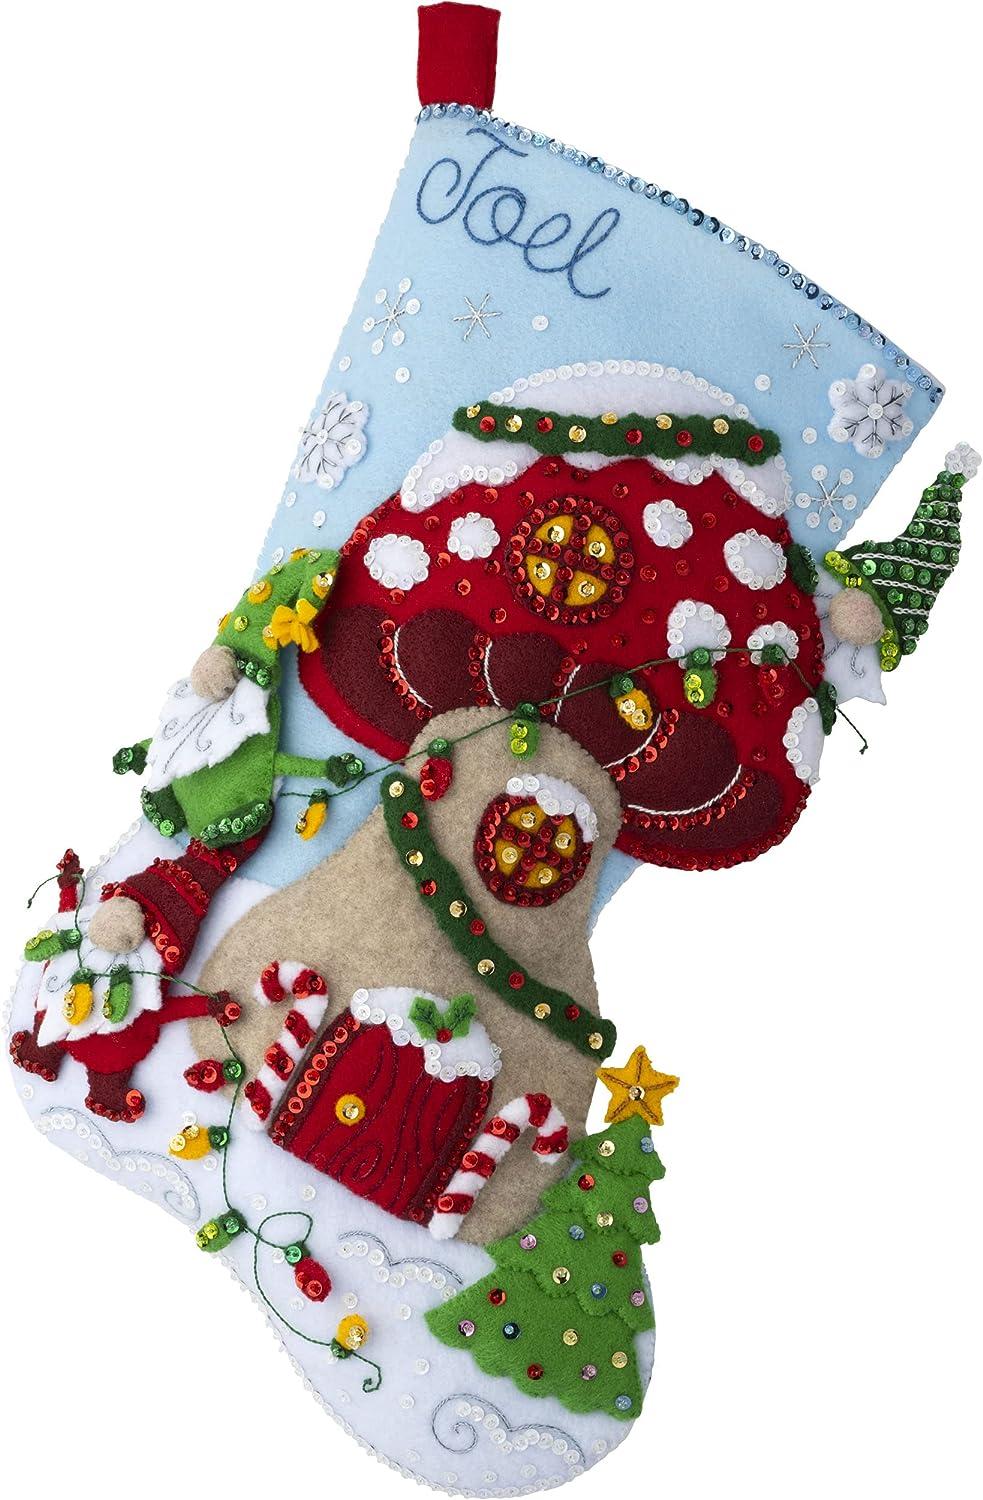 Bucilla Holiday Decorating Felt Applique Stocking Kit 86146 18 - Santa &  Elves in a Christmas Shoe House! Enchanting Design!